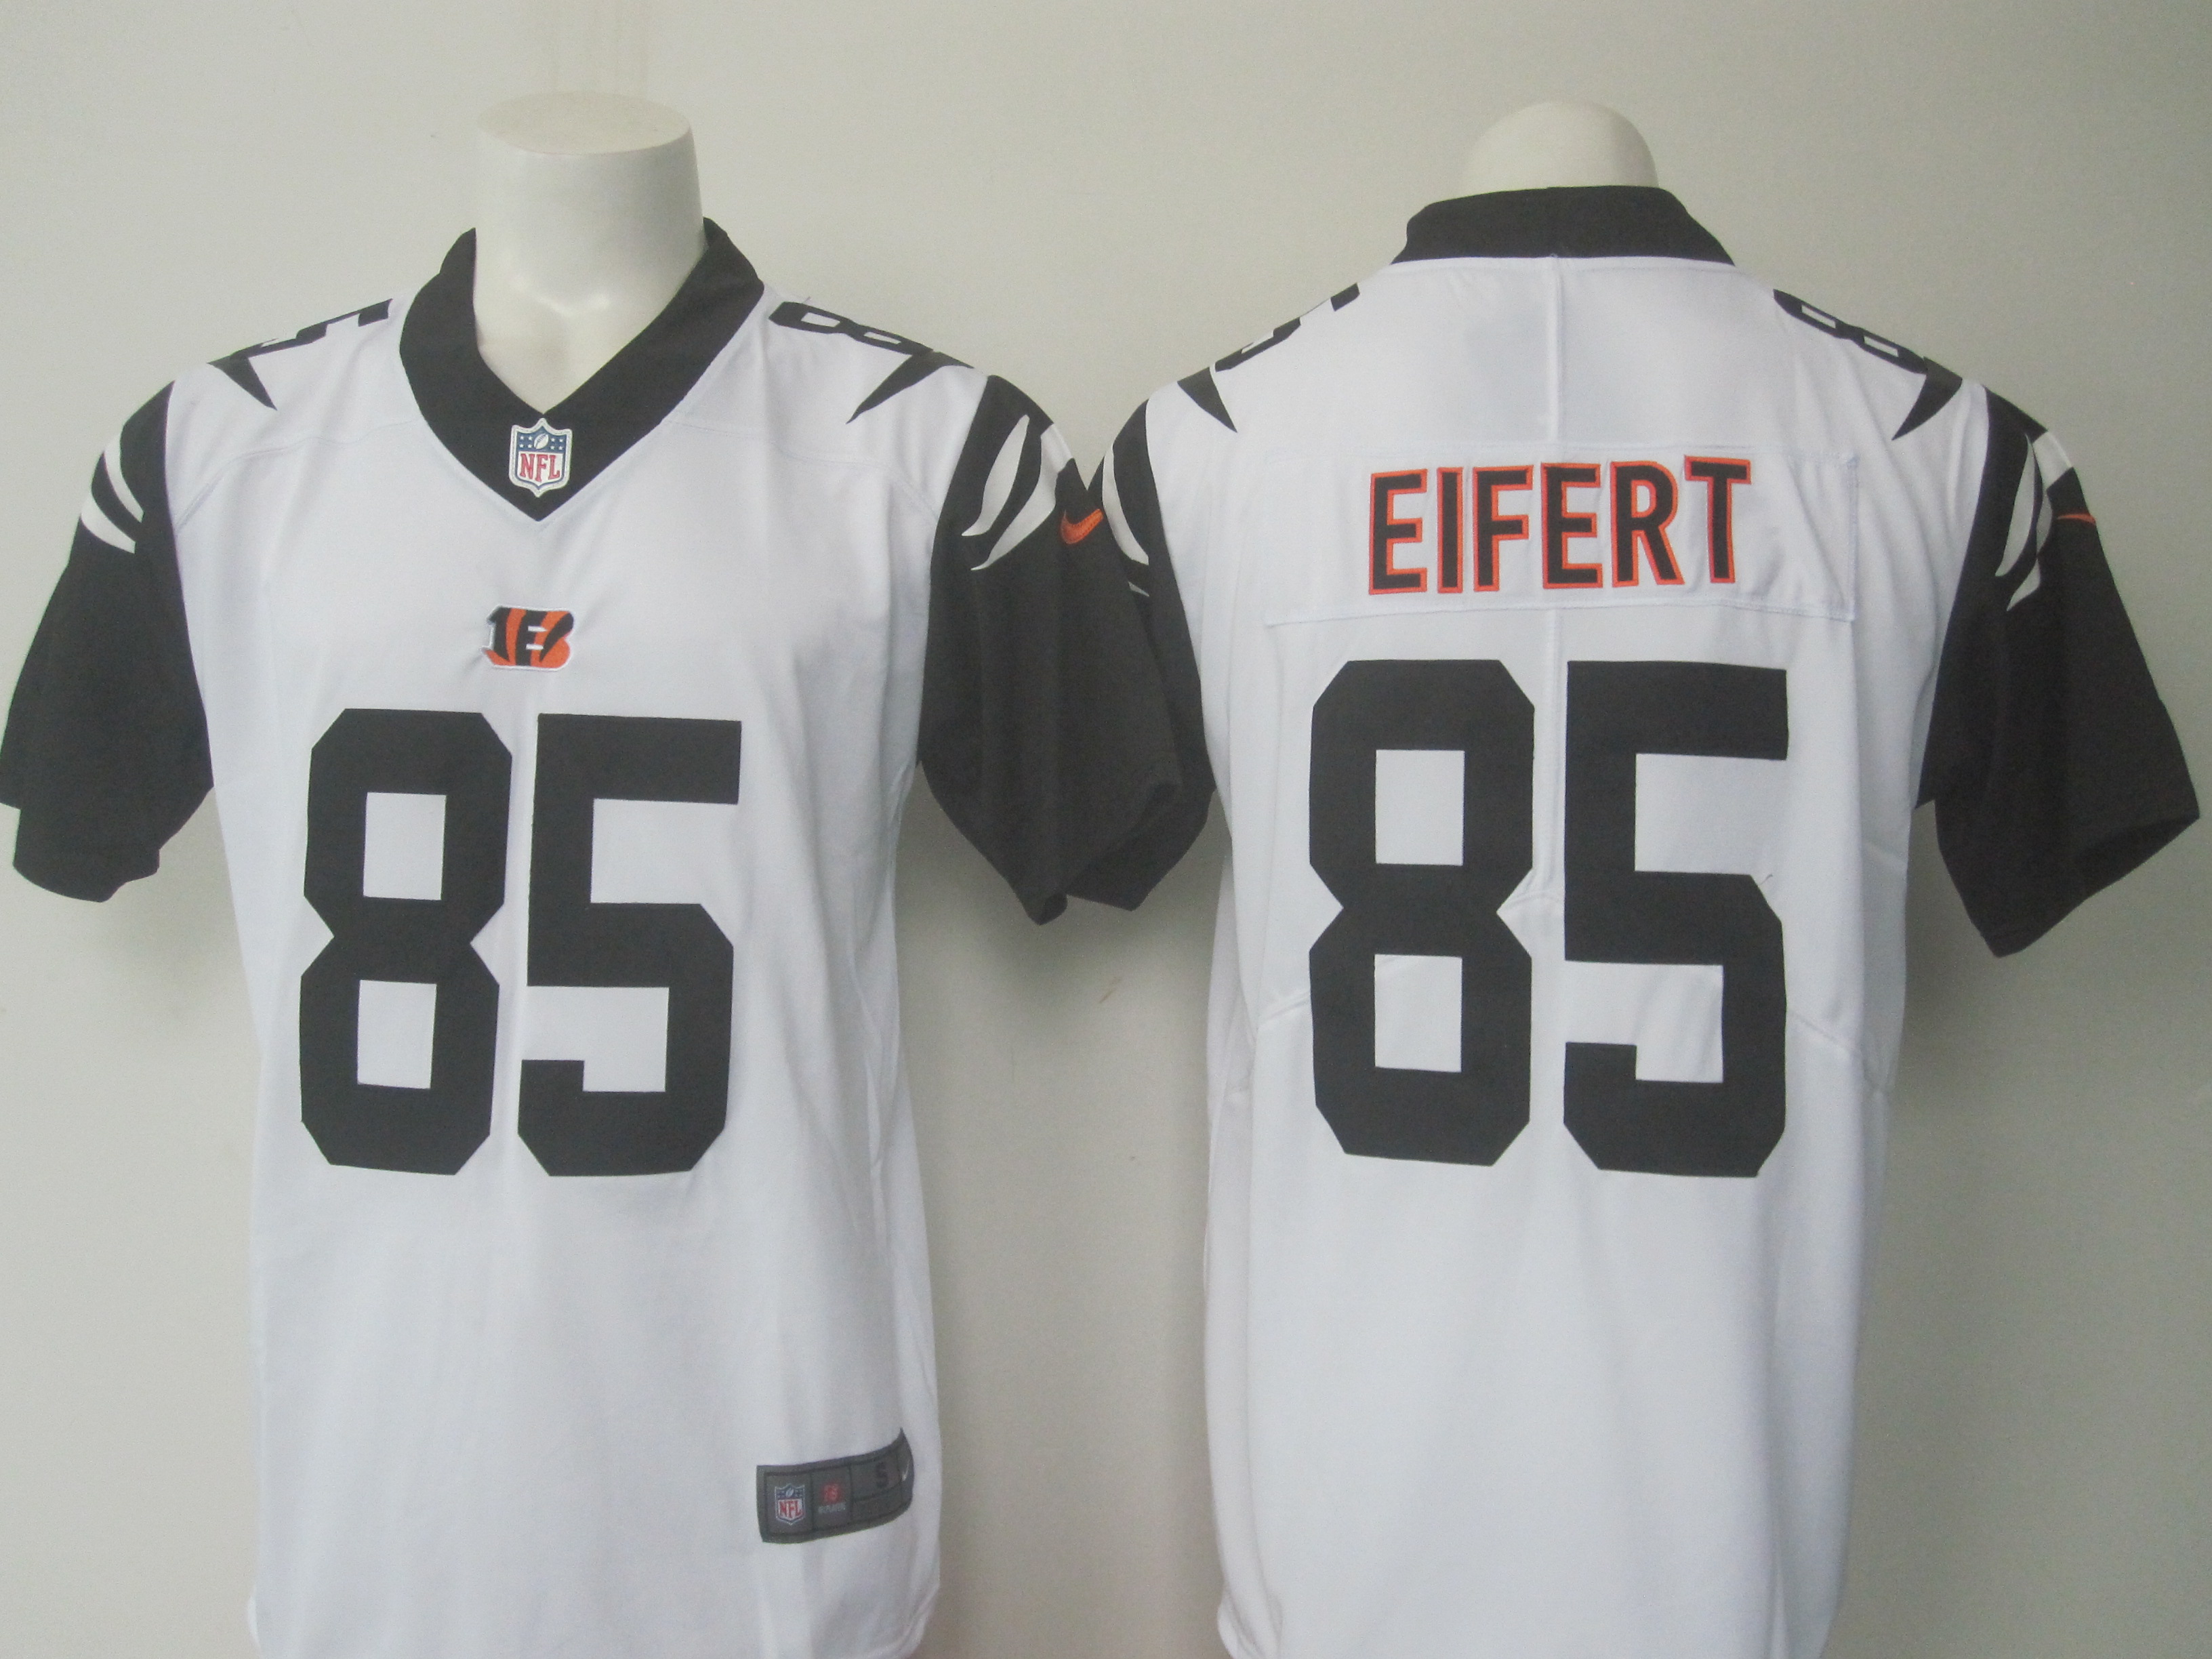 Men's Nike Bengals #85 Tyler Eifert White Limited Rush Stitched NFL Jersey